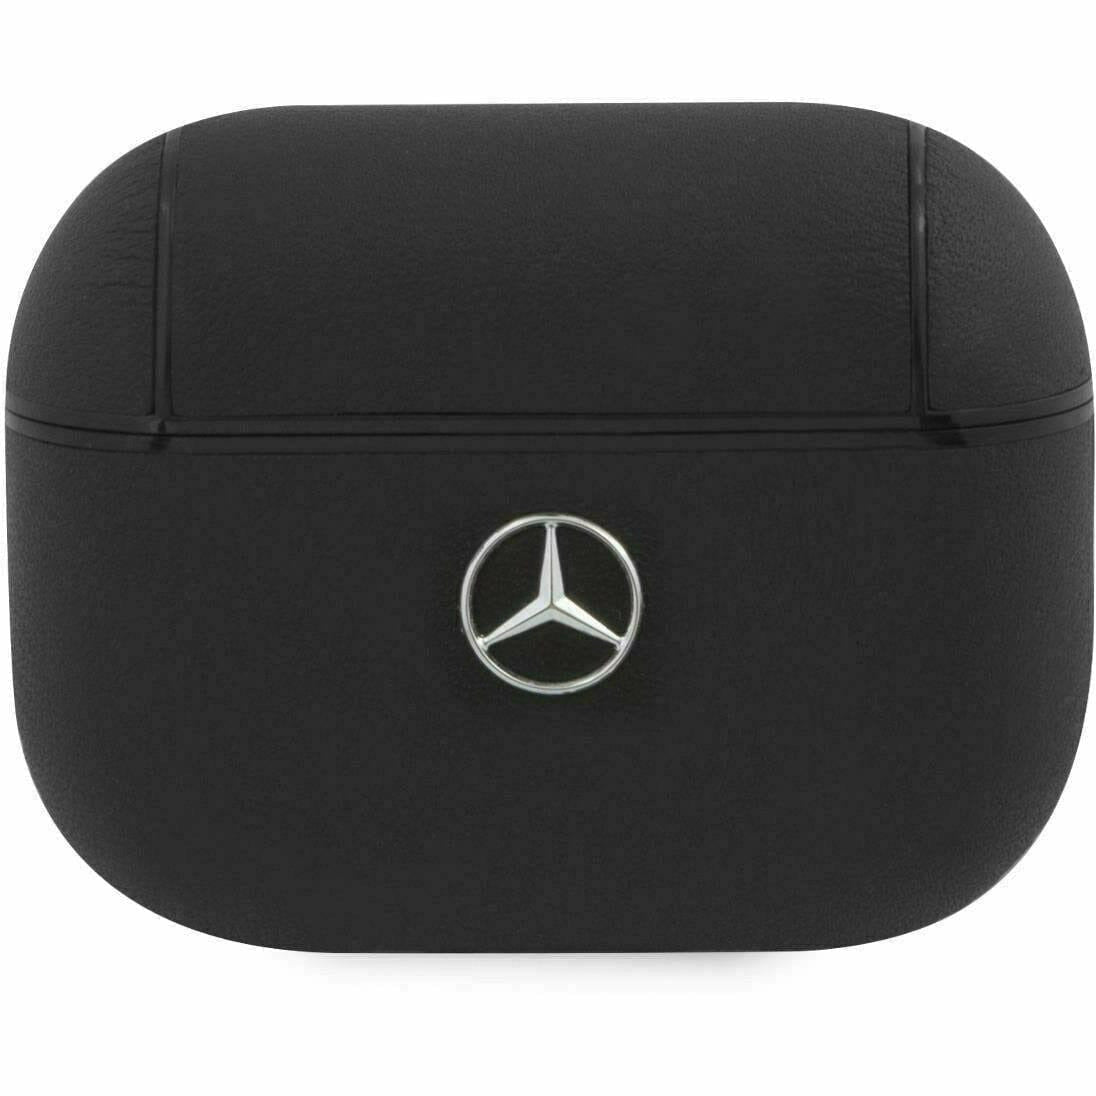 Mercedes Benz AMG Petronas F1 Credit Card Holder Wallet Black